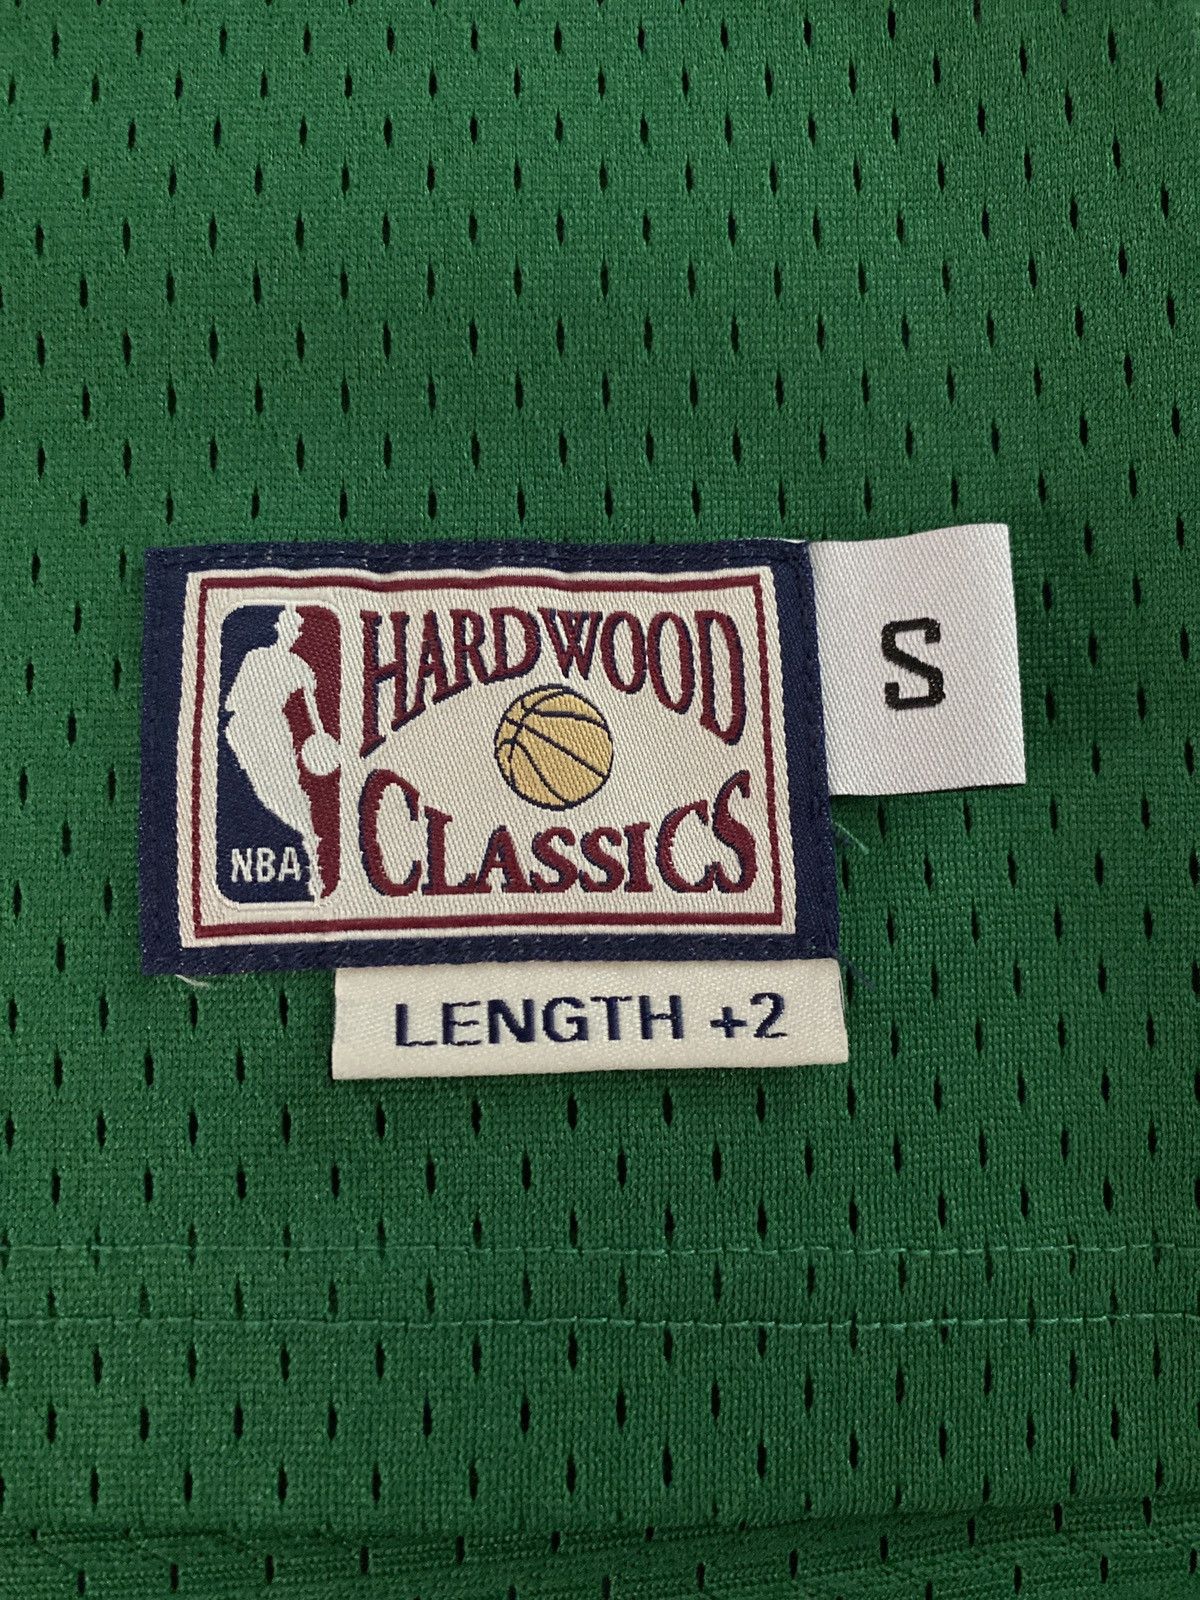 Adidas Hardwood Classics Larry Bird Celtics Jersey Size US S / EU 44-46 / 1 - 4 Thumbnail